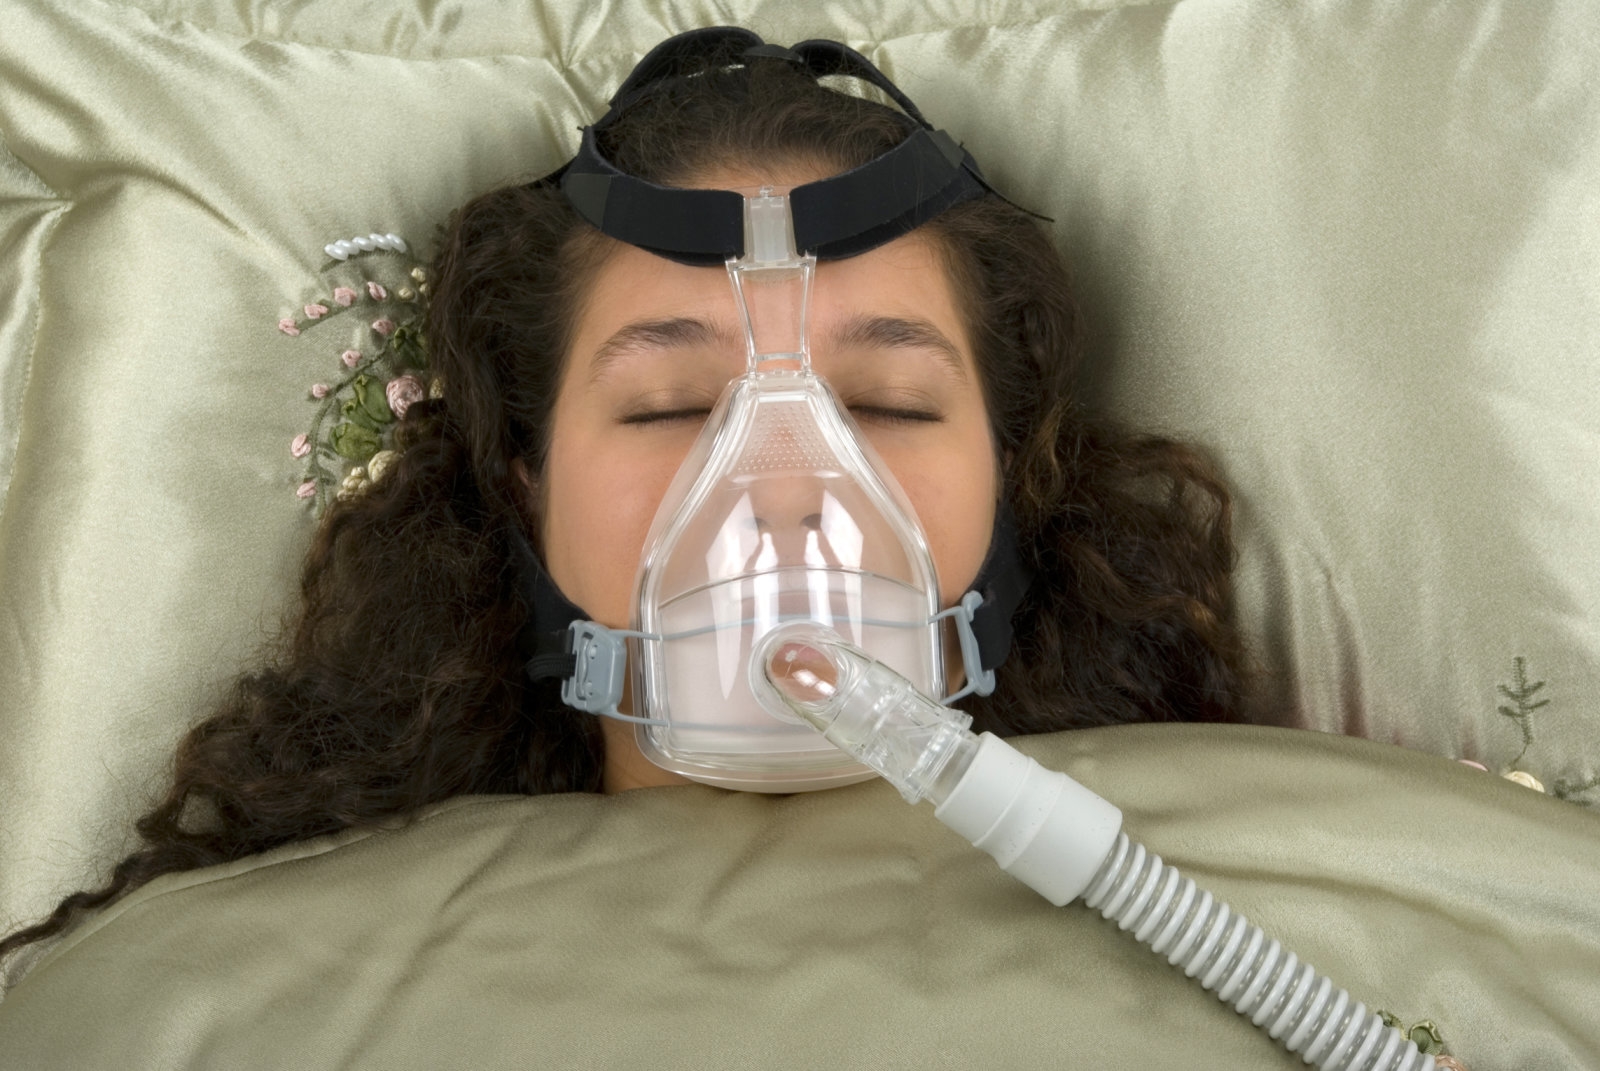 FDA clears implant that treats severe sleep apnea | DeviceDaily.com